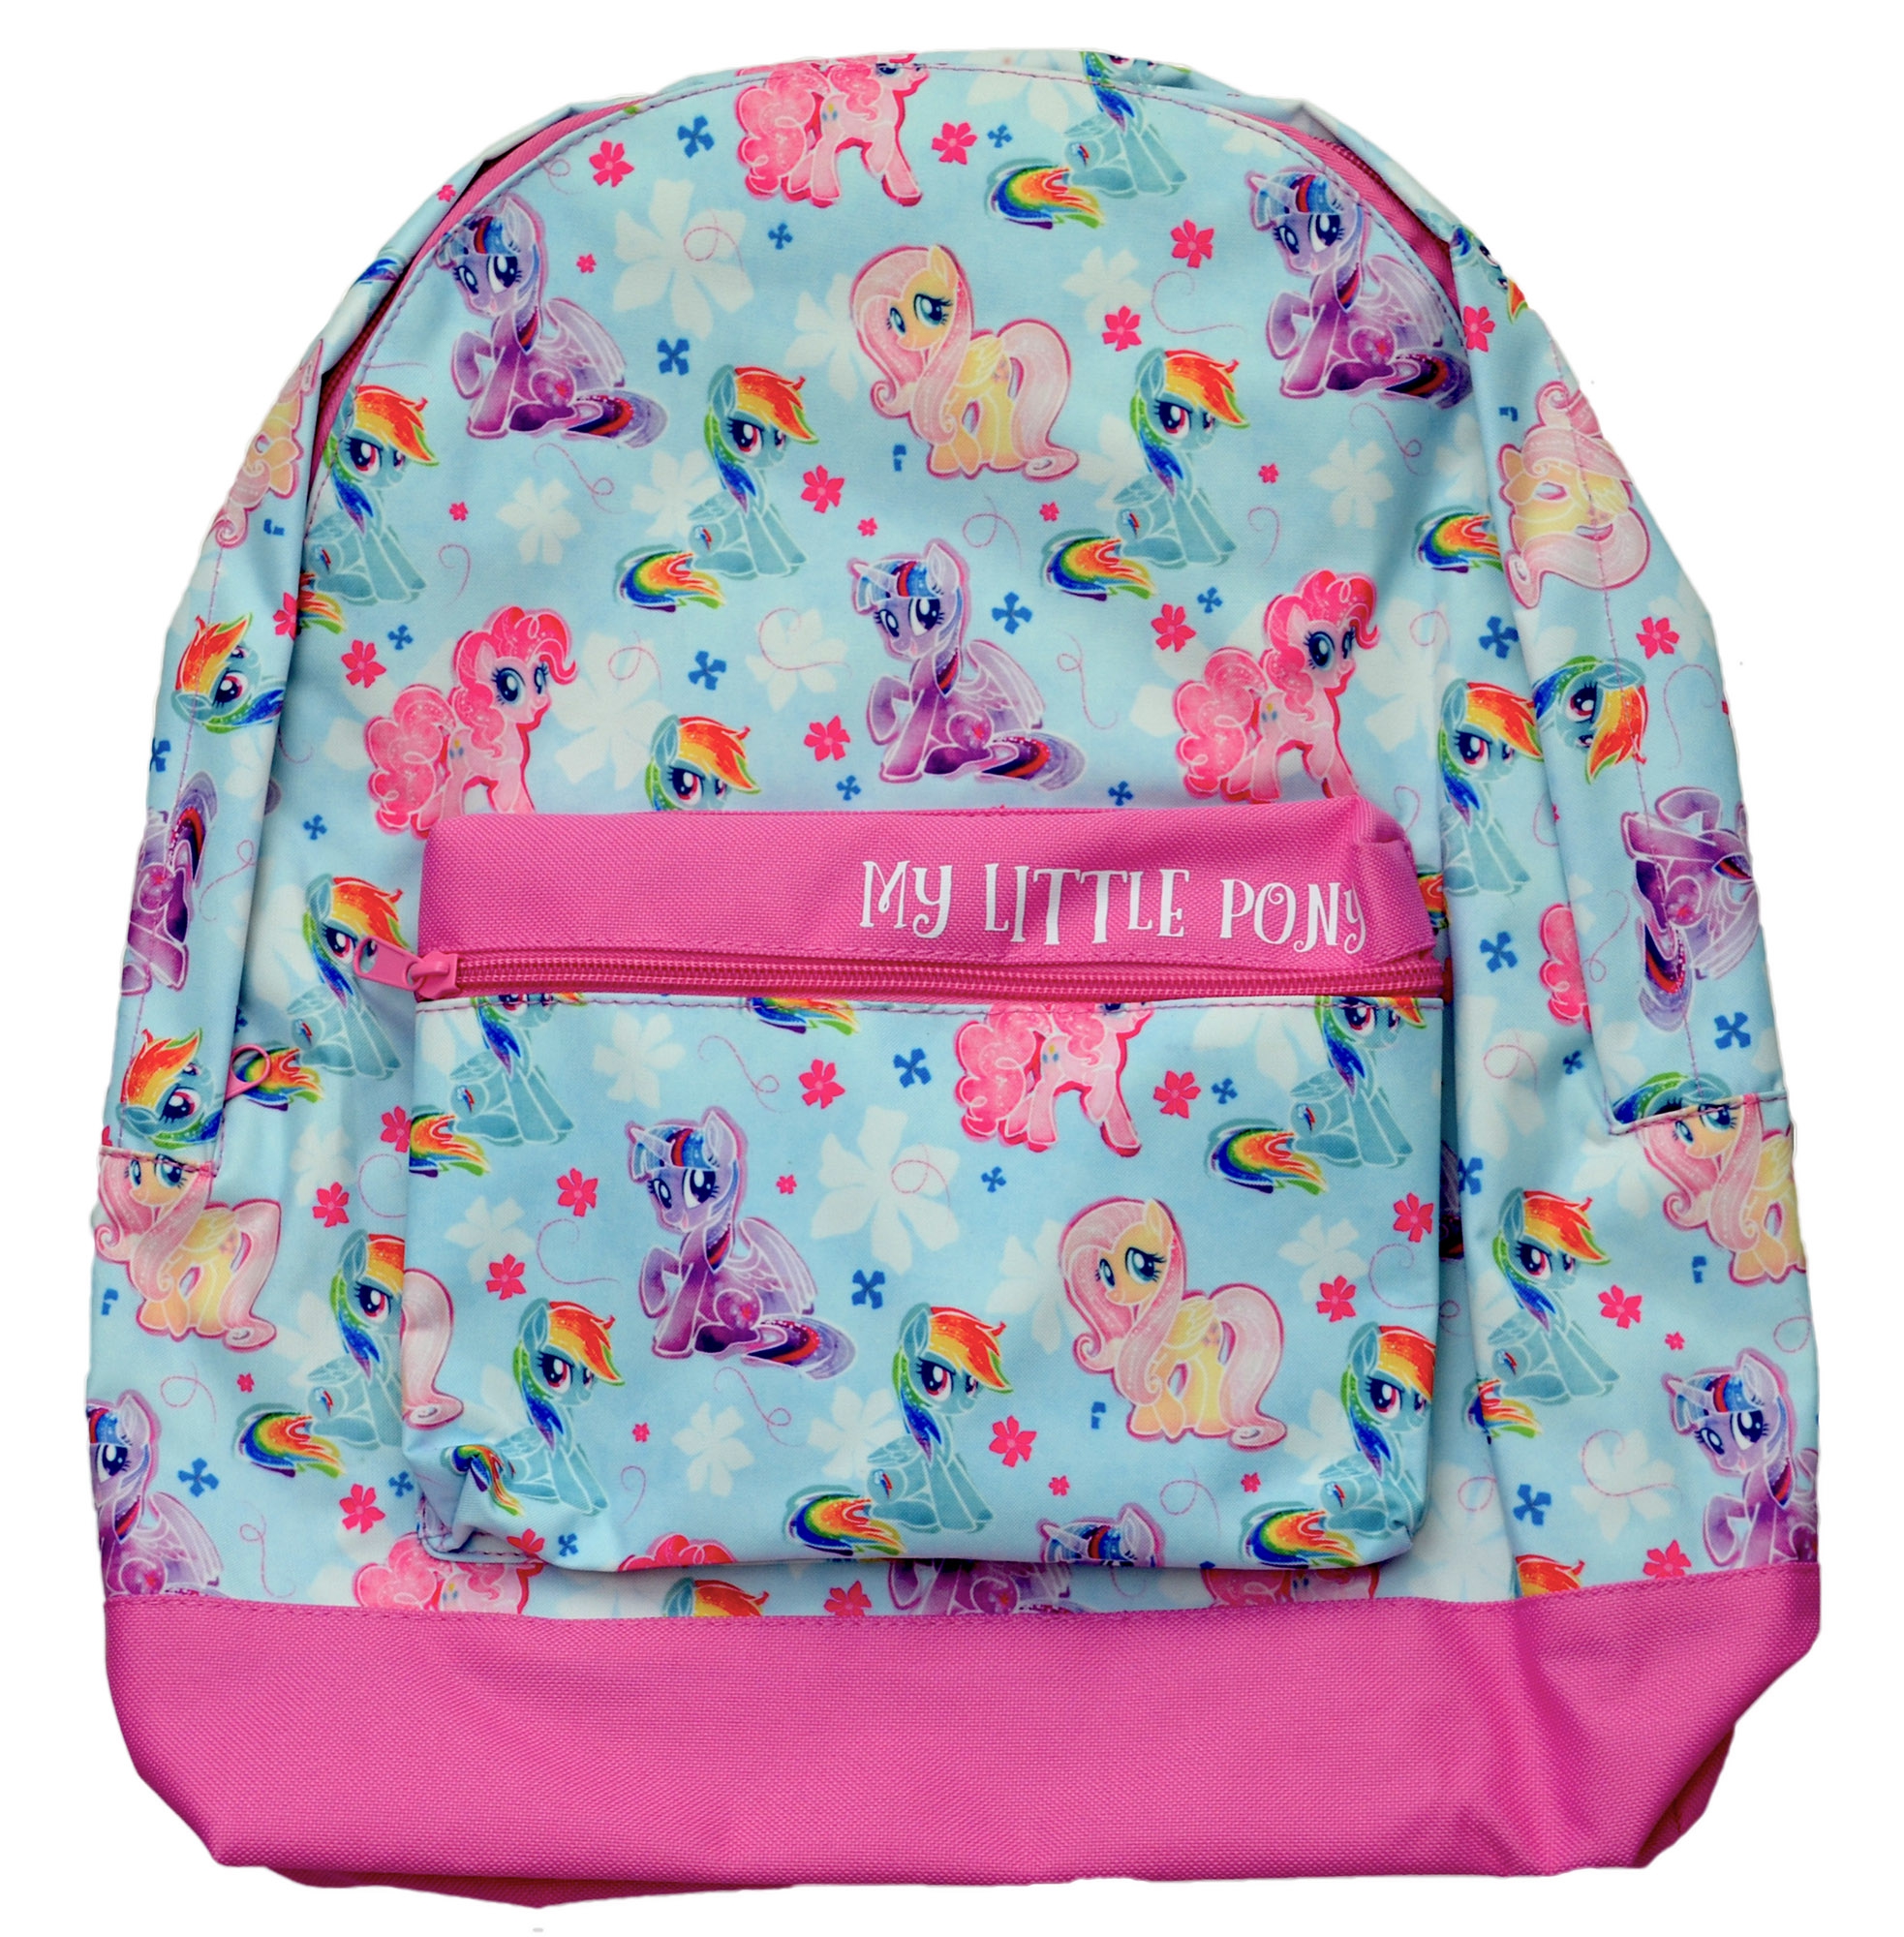 My Little Pony 'Friendship' Roxy School Bag Rucksack Backpack